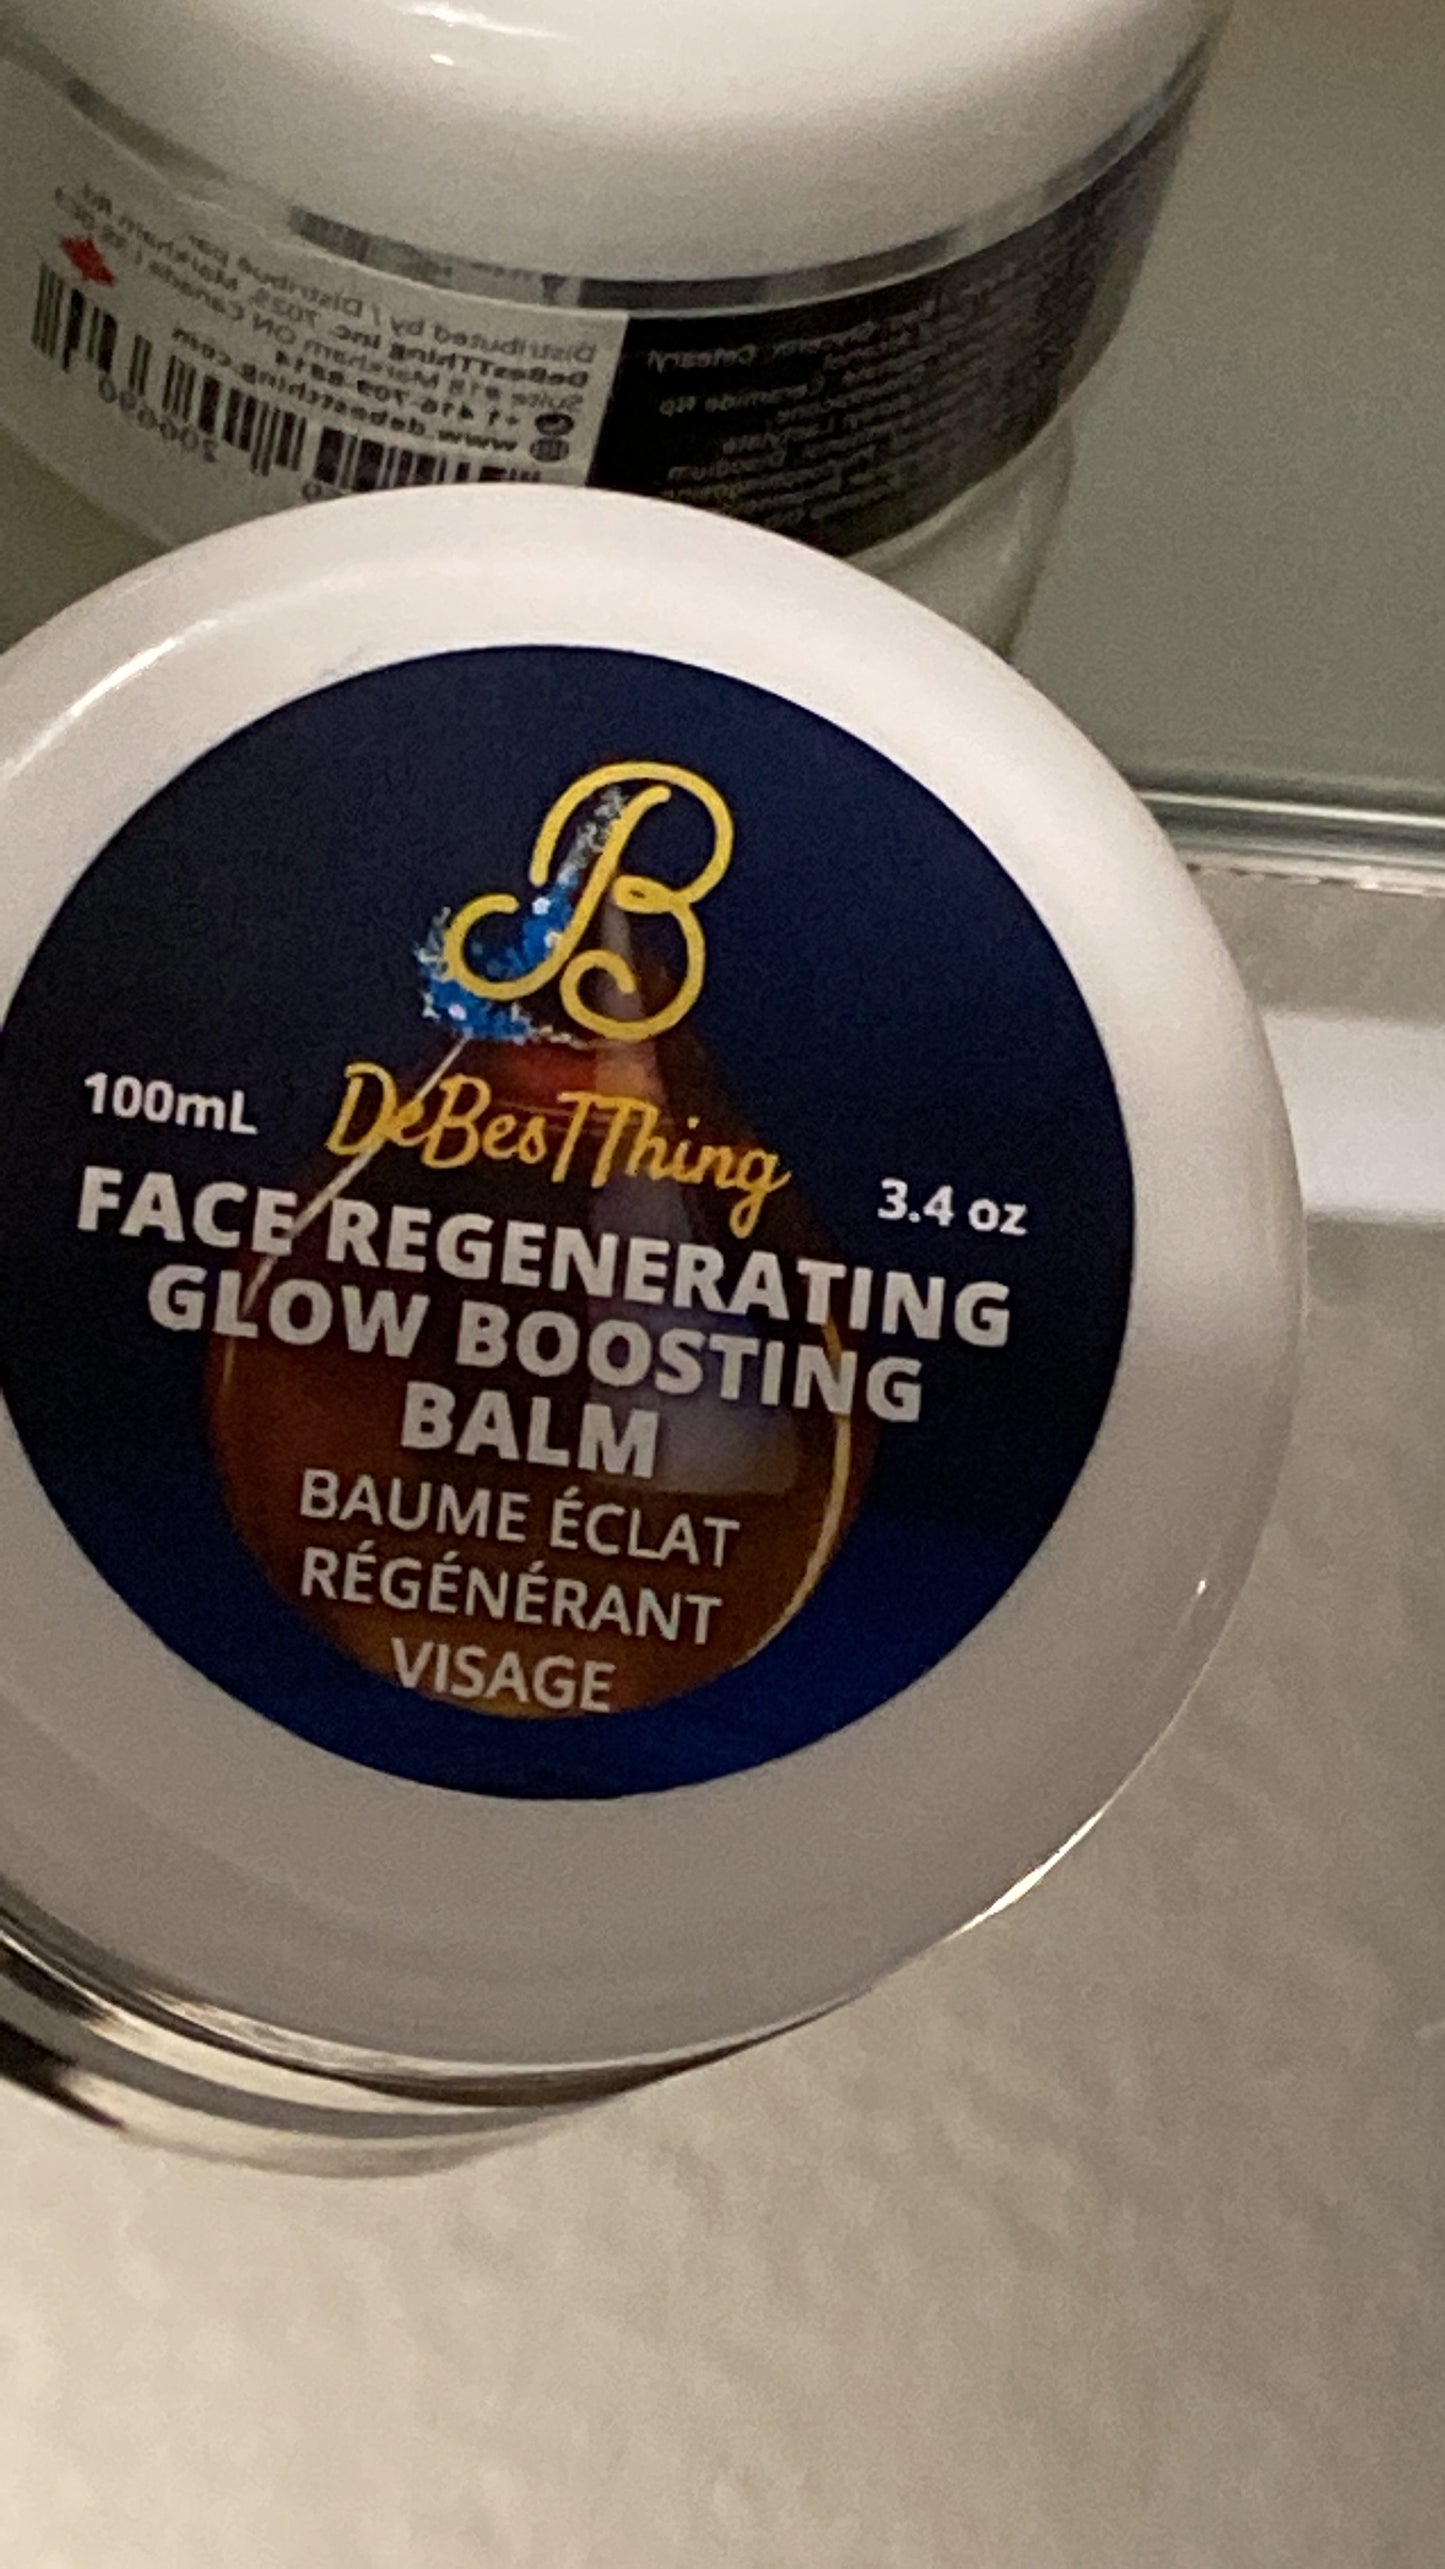 Face Regenerating Glow Boosting Balm